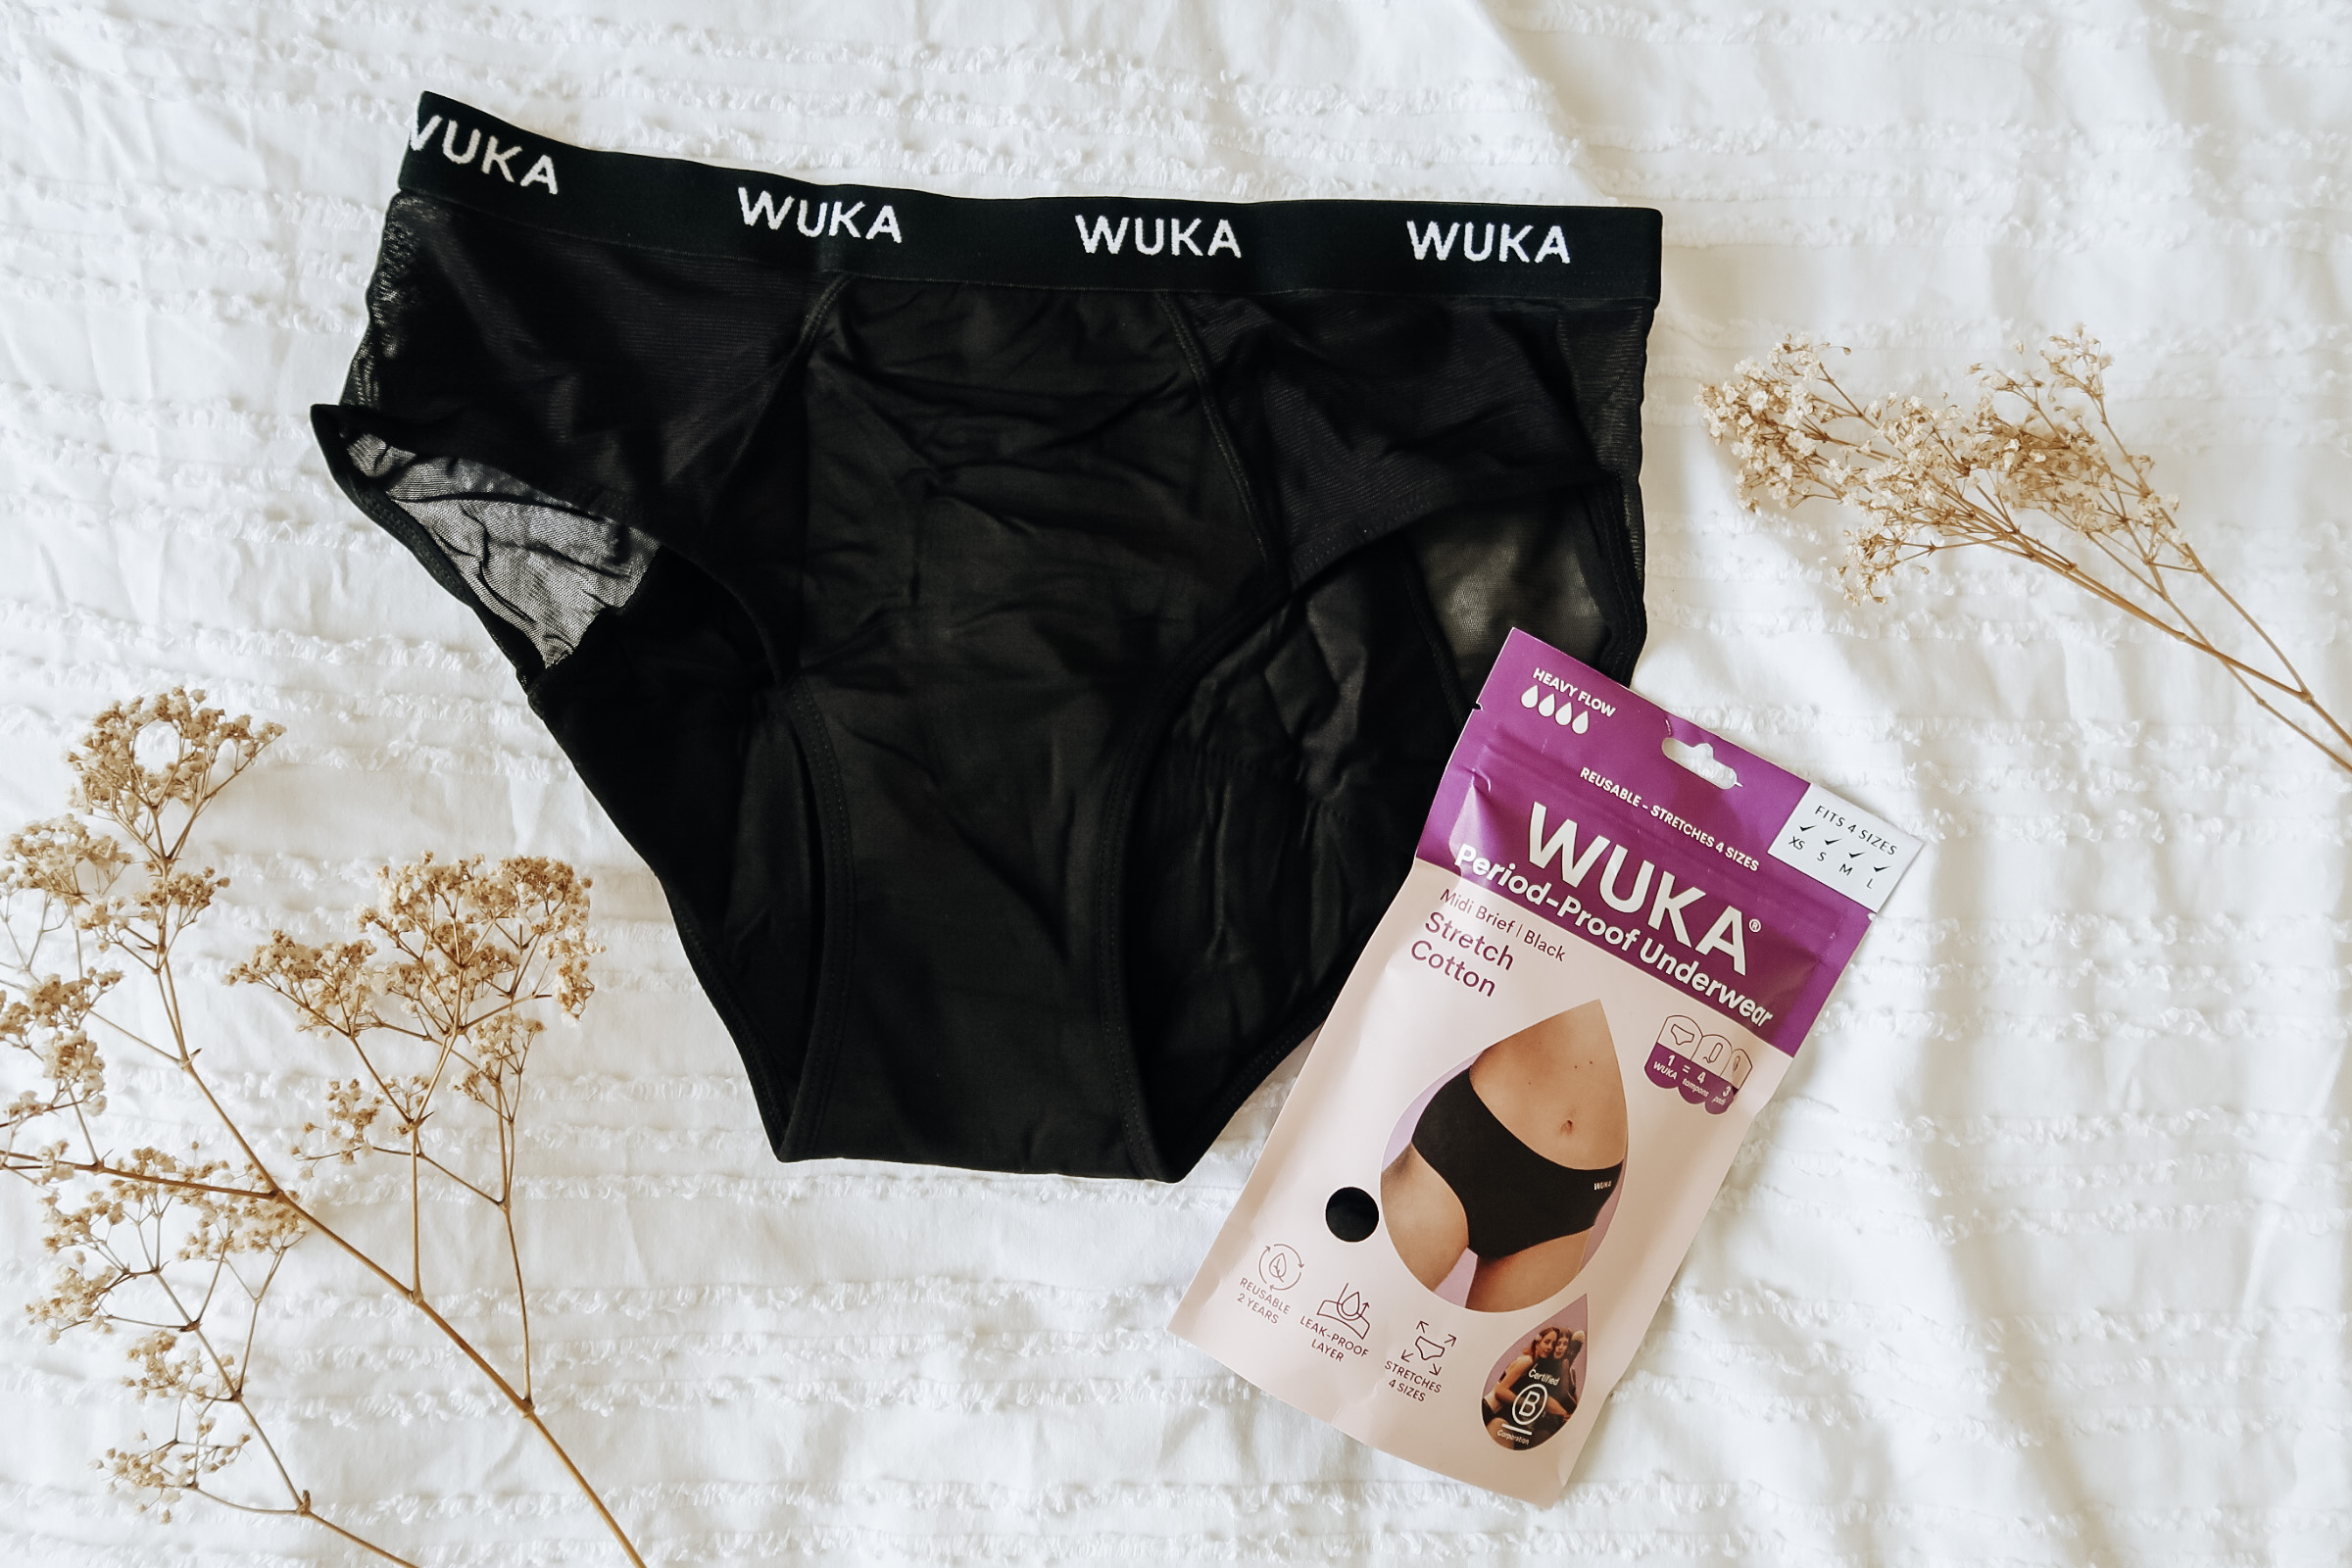 A pair of black WUKA period pants